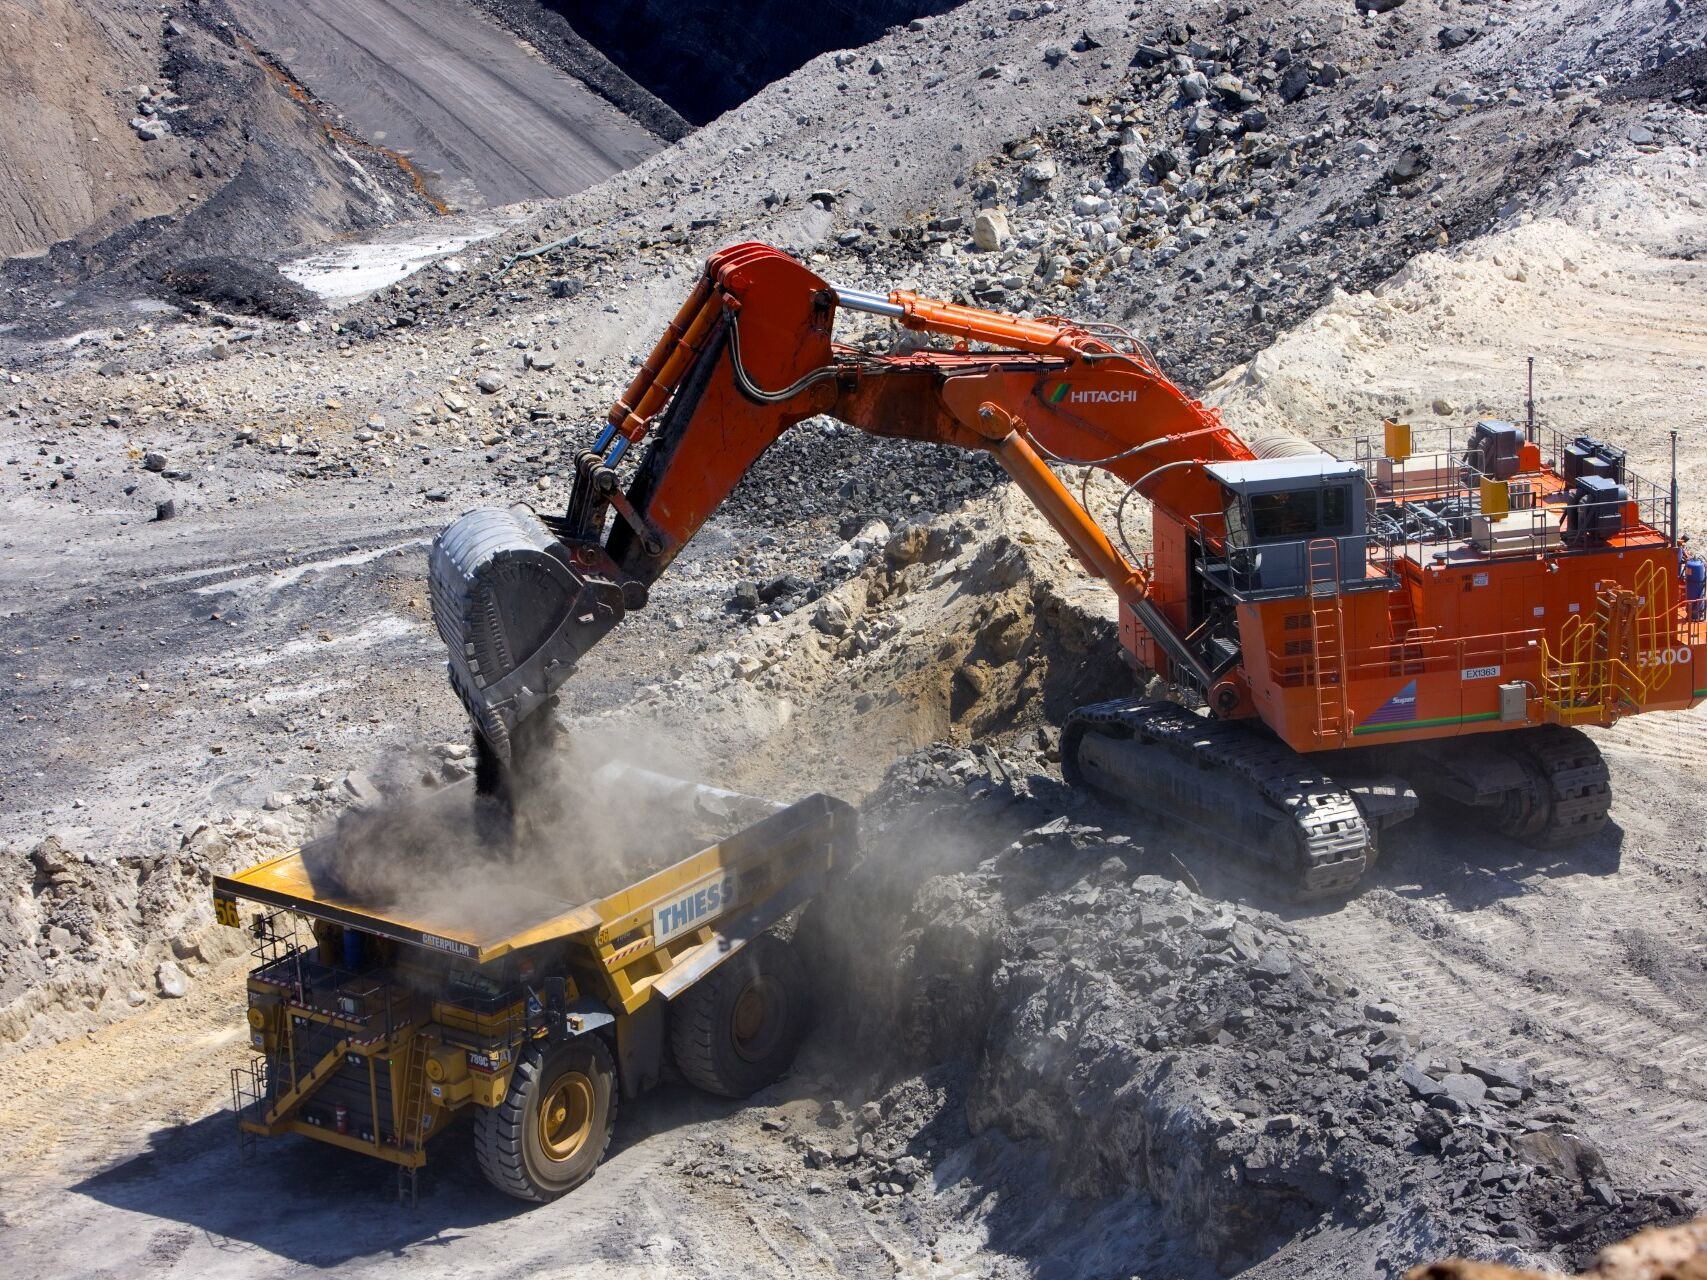 Tarong Coal Project - Meandu Mine